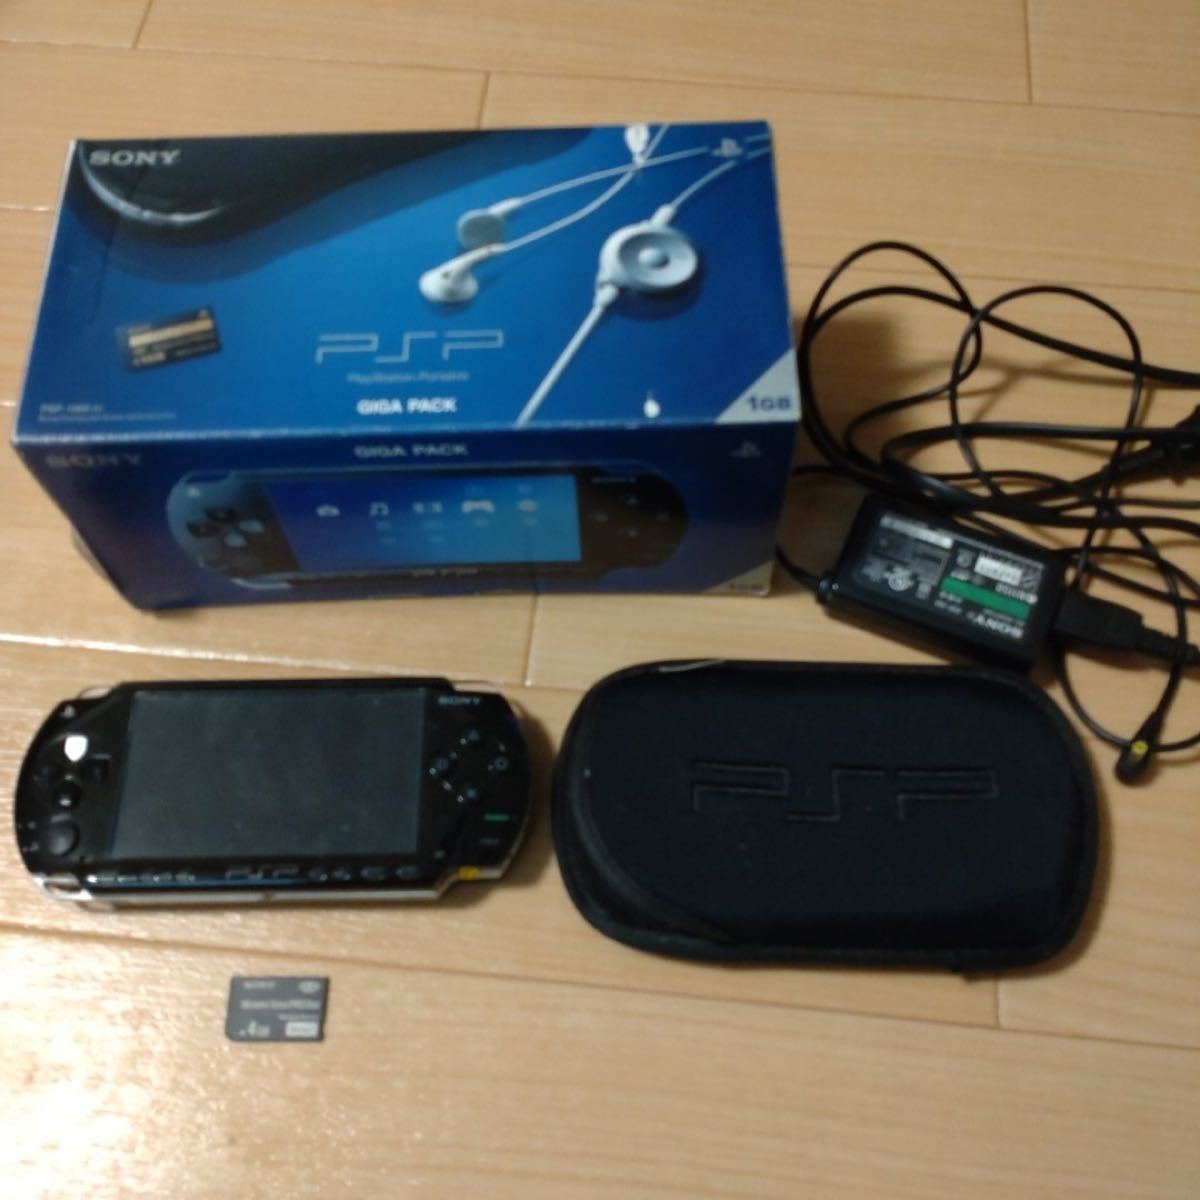 PSP-1000 ギガパック 箱付き プレイ可能 画面フィルム貼り付け使用 未改造 純正 メモリースティック4G・1G付 ソニー